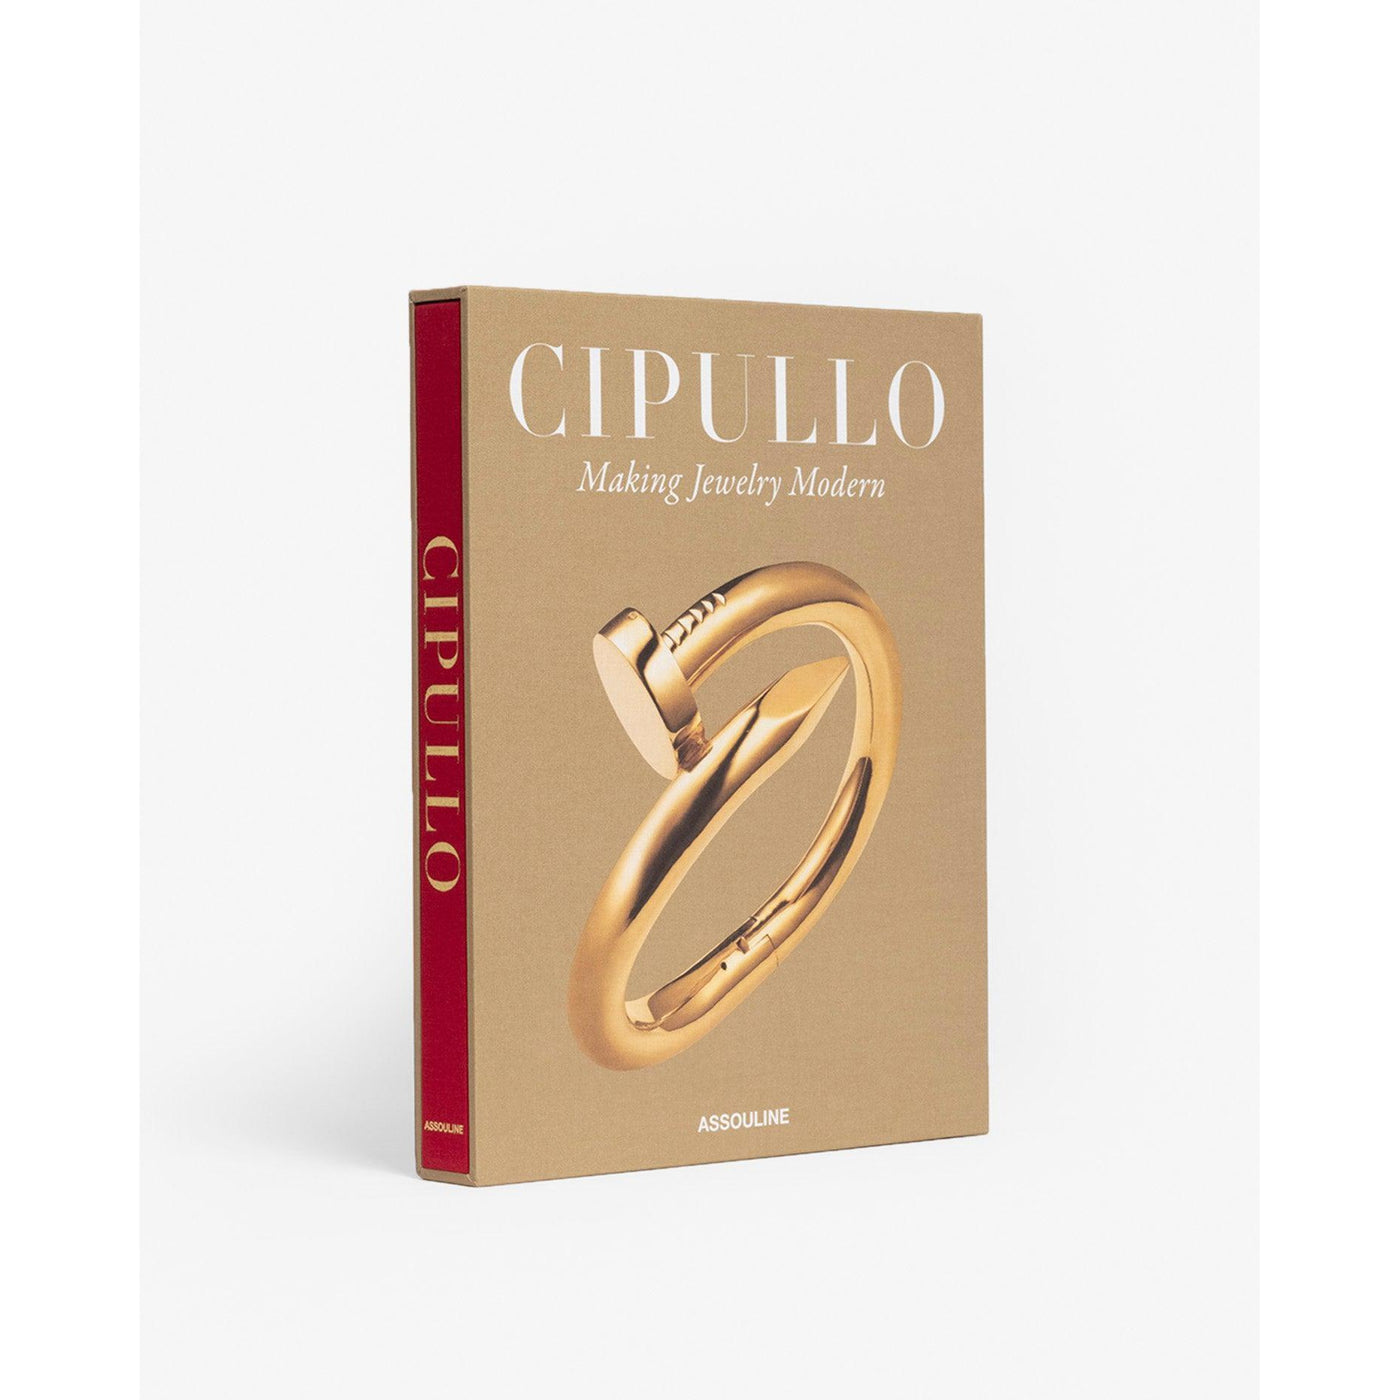 Cipullo: Making Jewelry Modern